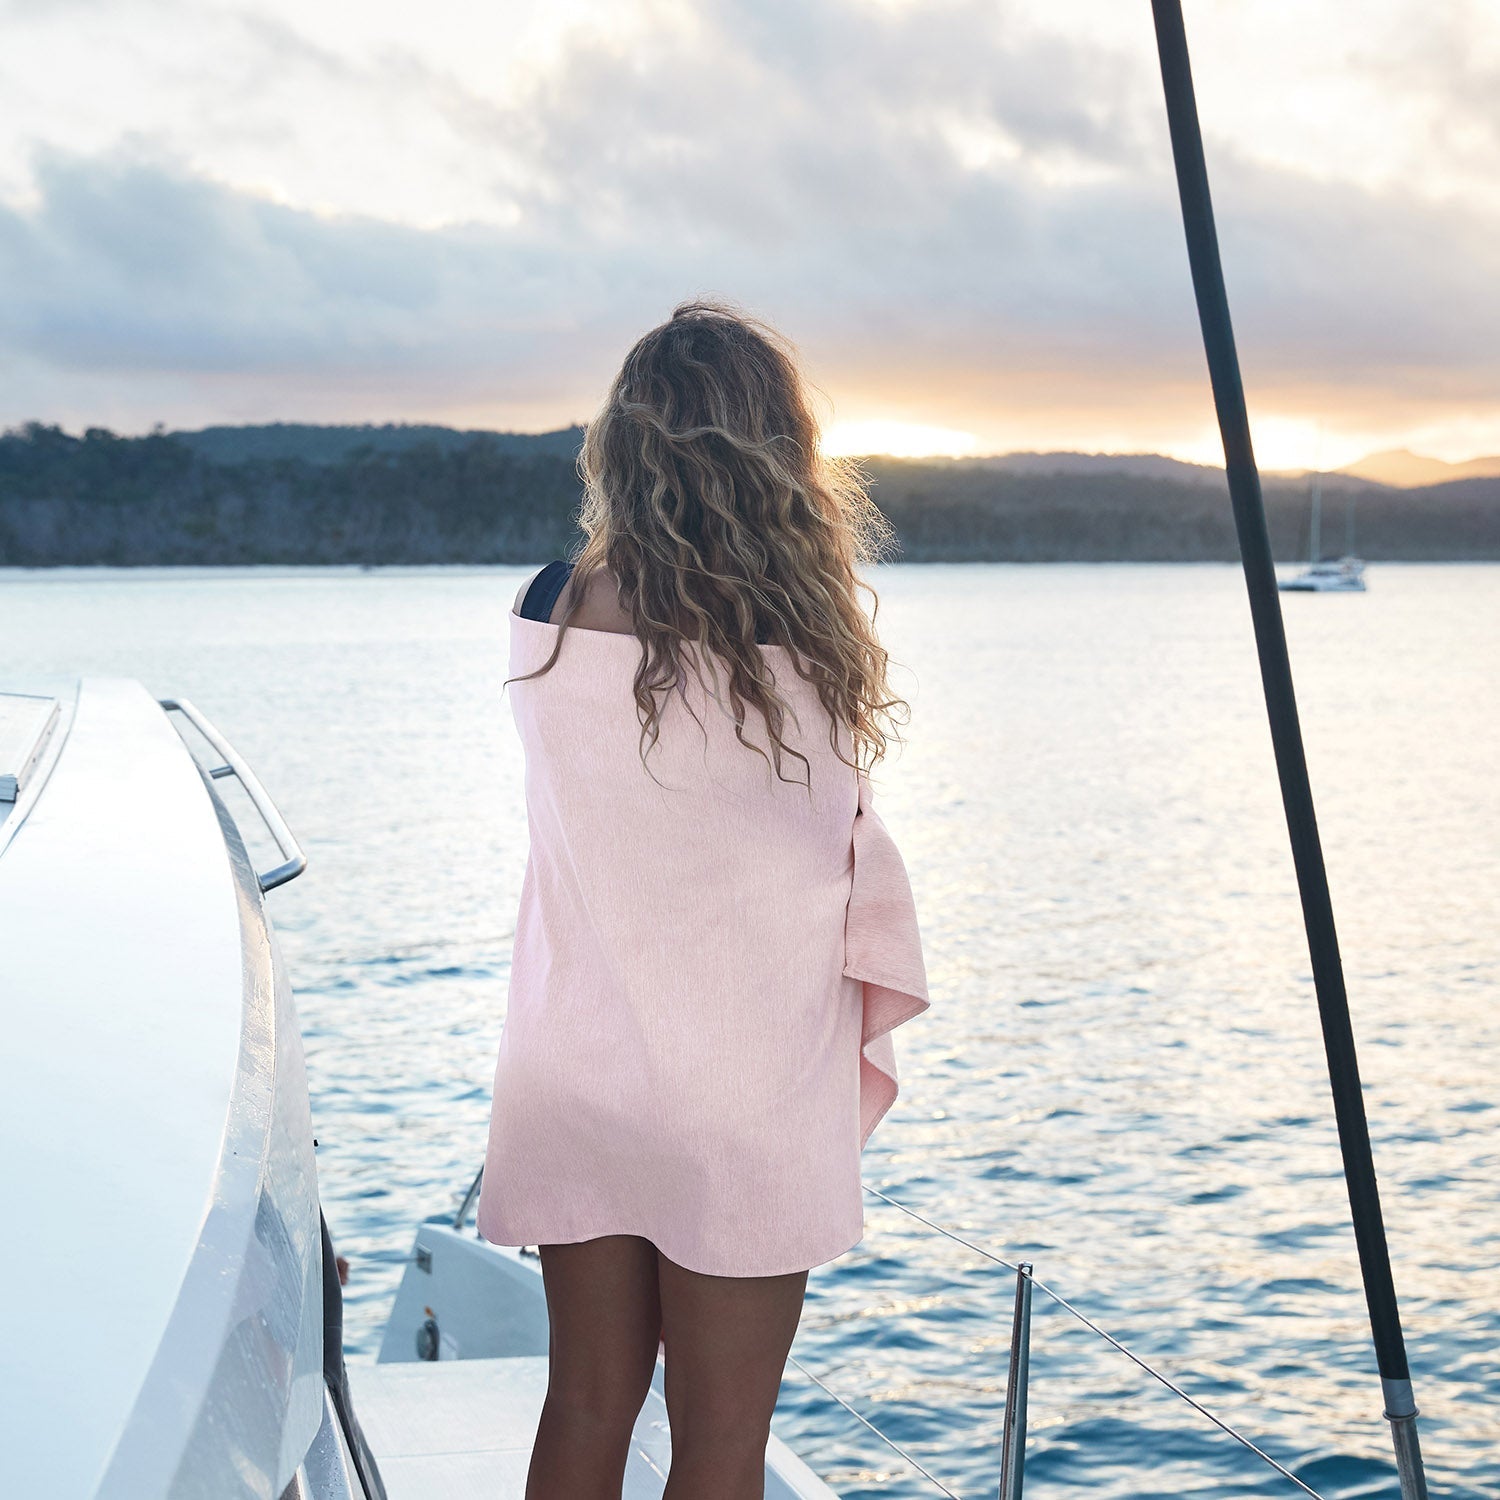 Dock & Bay Travel Towels - Essential - Island Pink